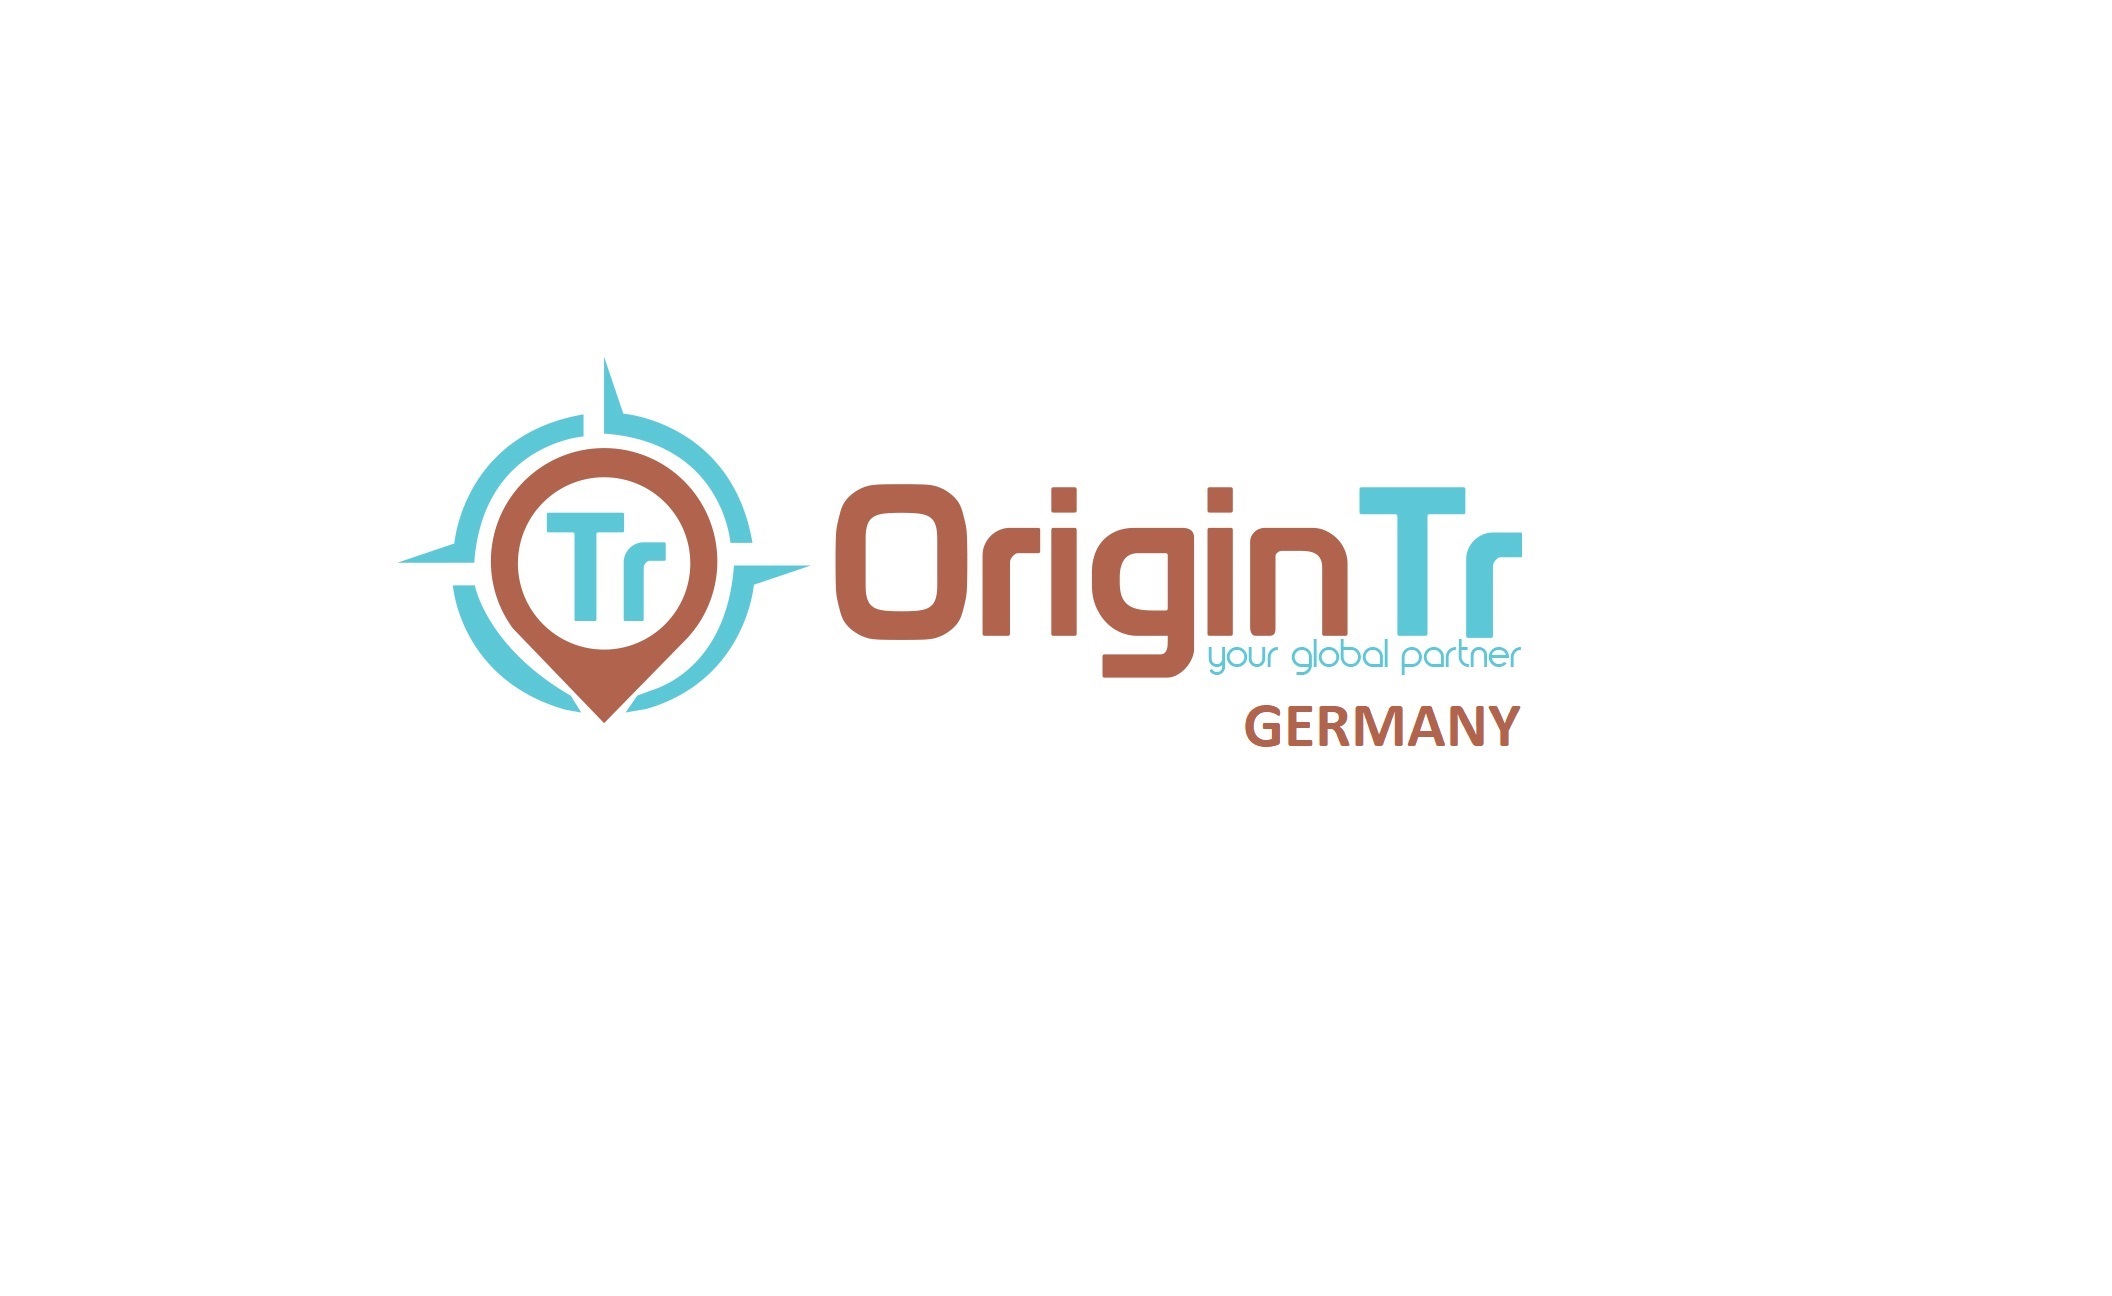 OriginTR Germany